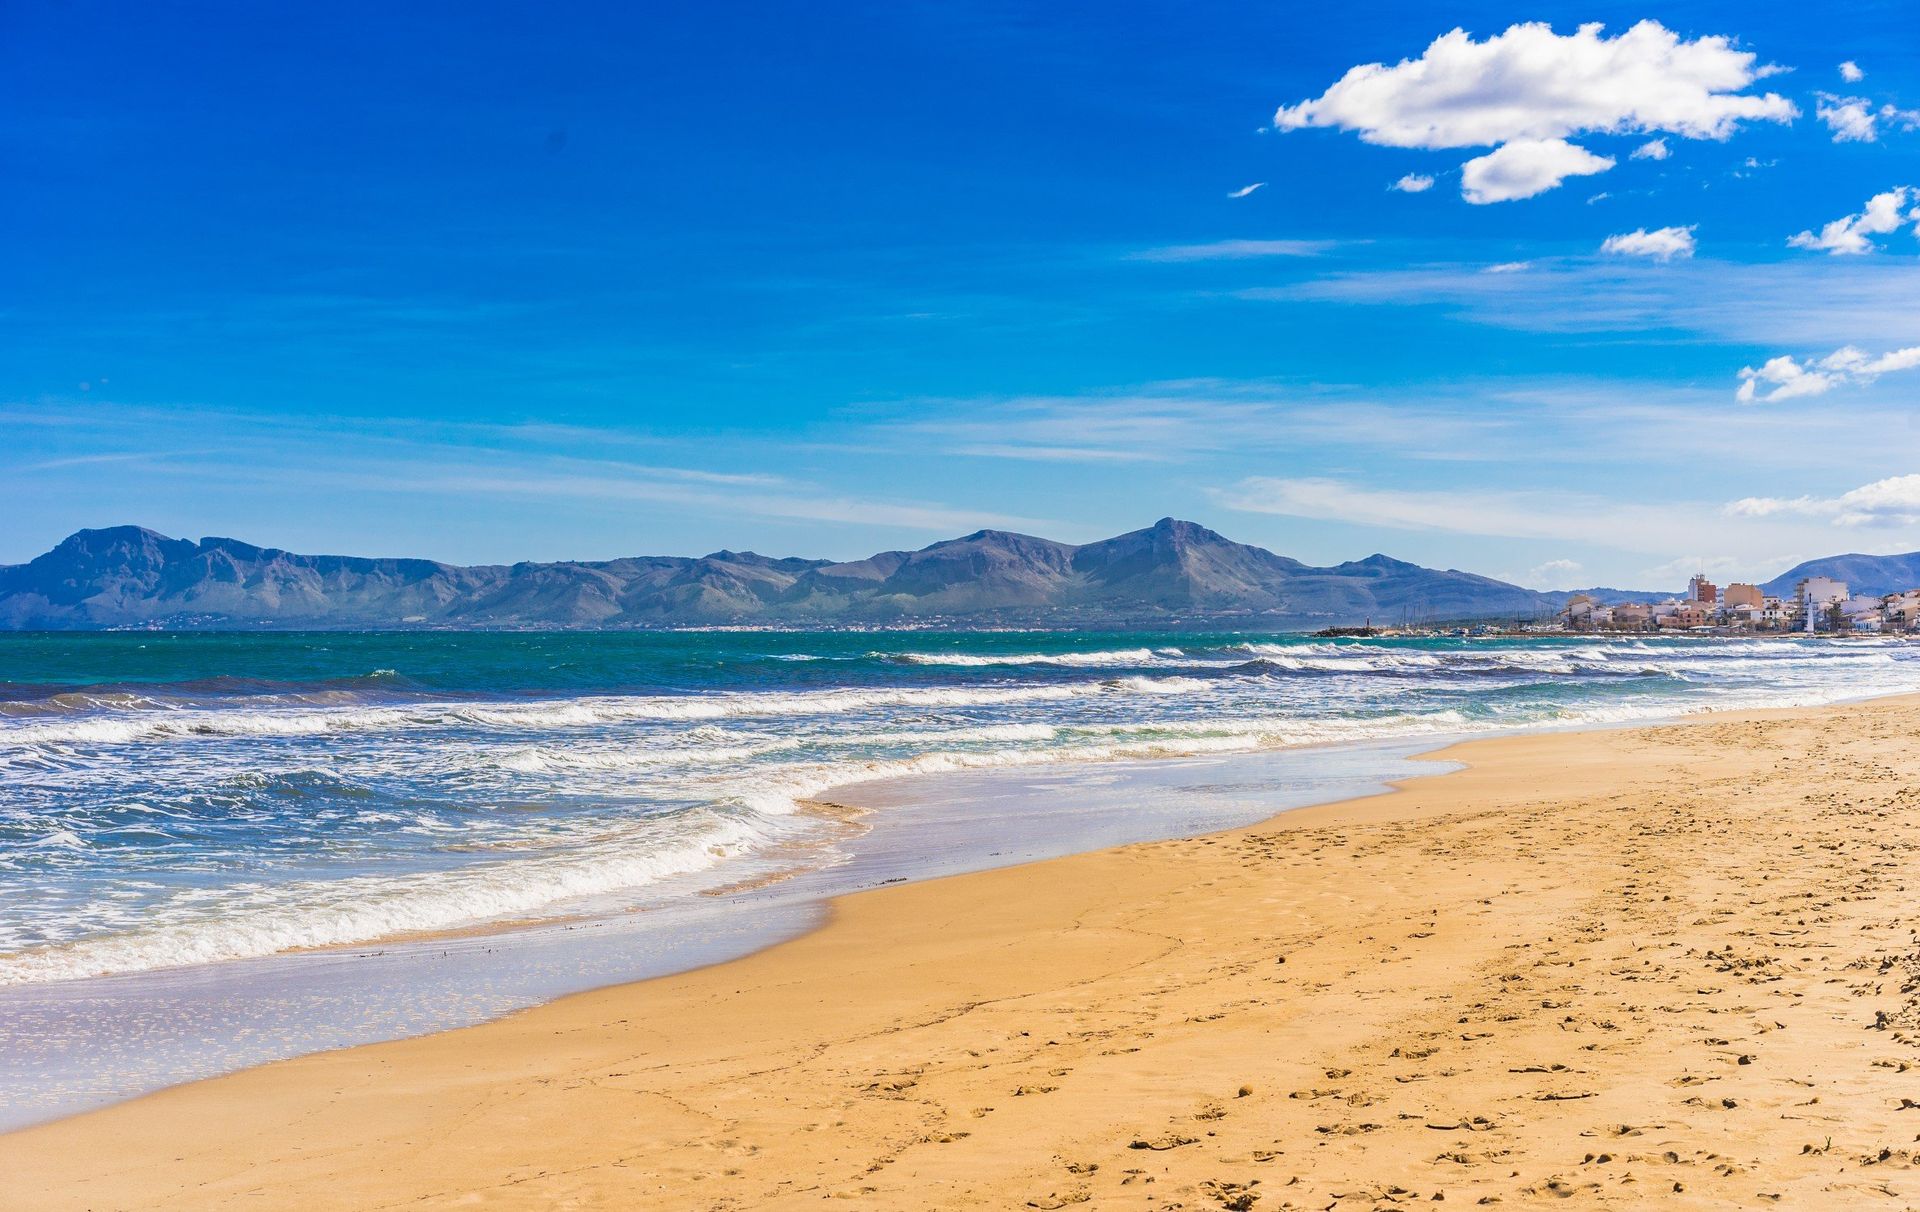 The golden coast of Platja de Muro beach in Can Picafort resort